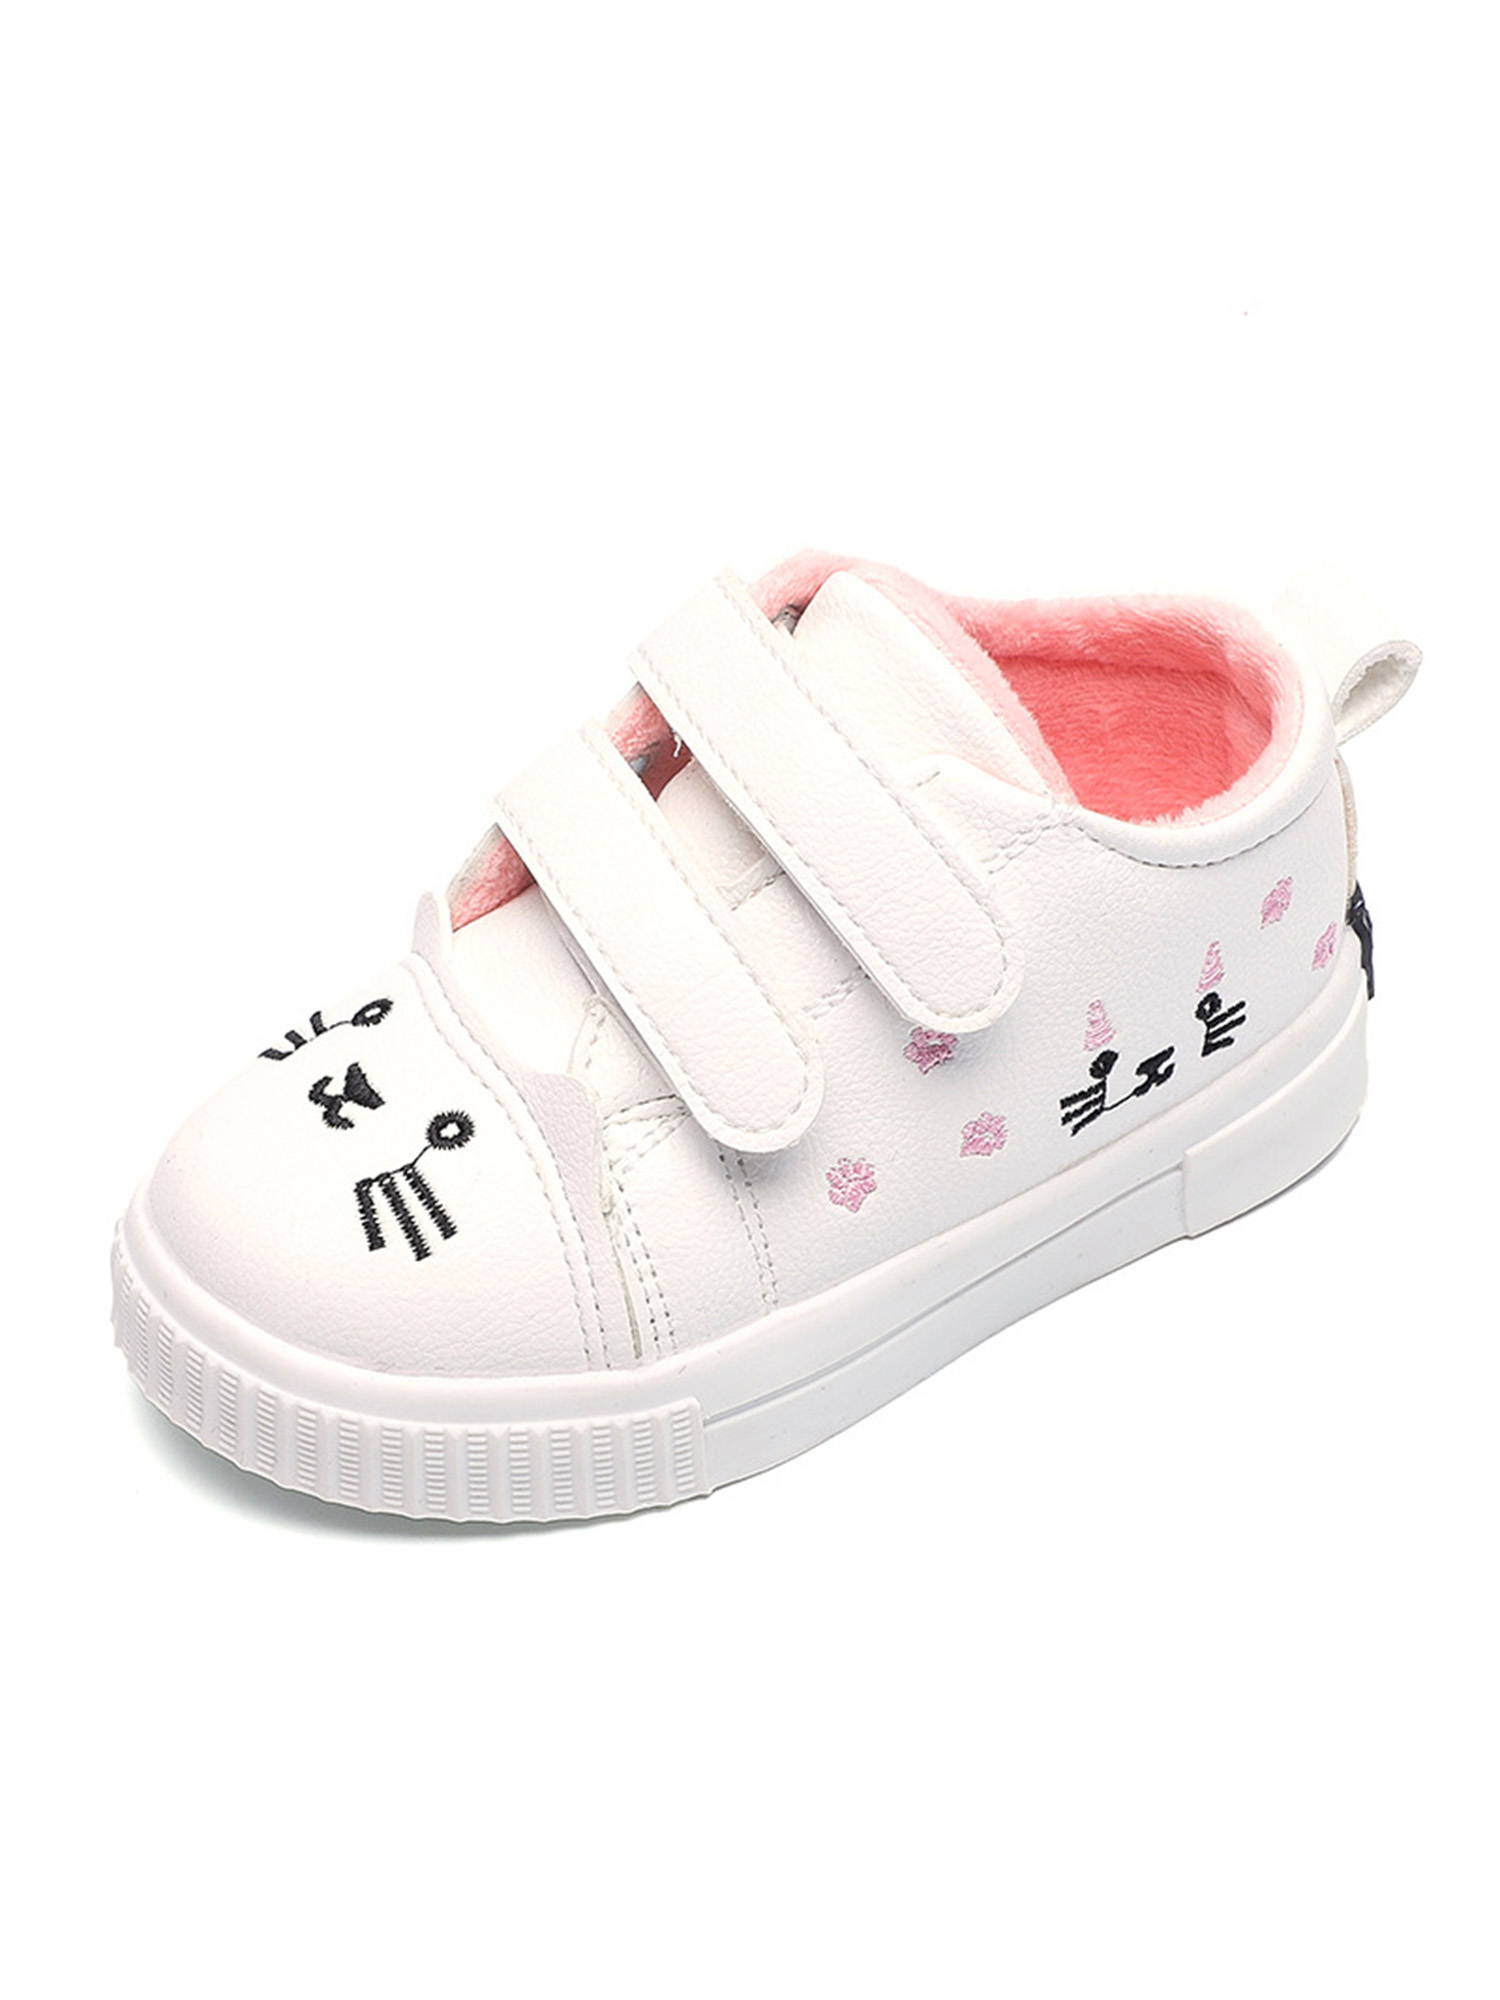 UKAP Boys Girls Anti-Slip Classic Low Top Slip On Sneakers Tennis Shoes Kids Flat Shoes - image 1 of 3